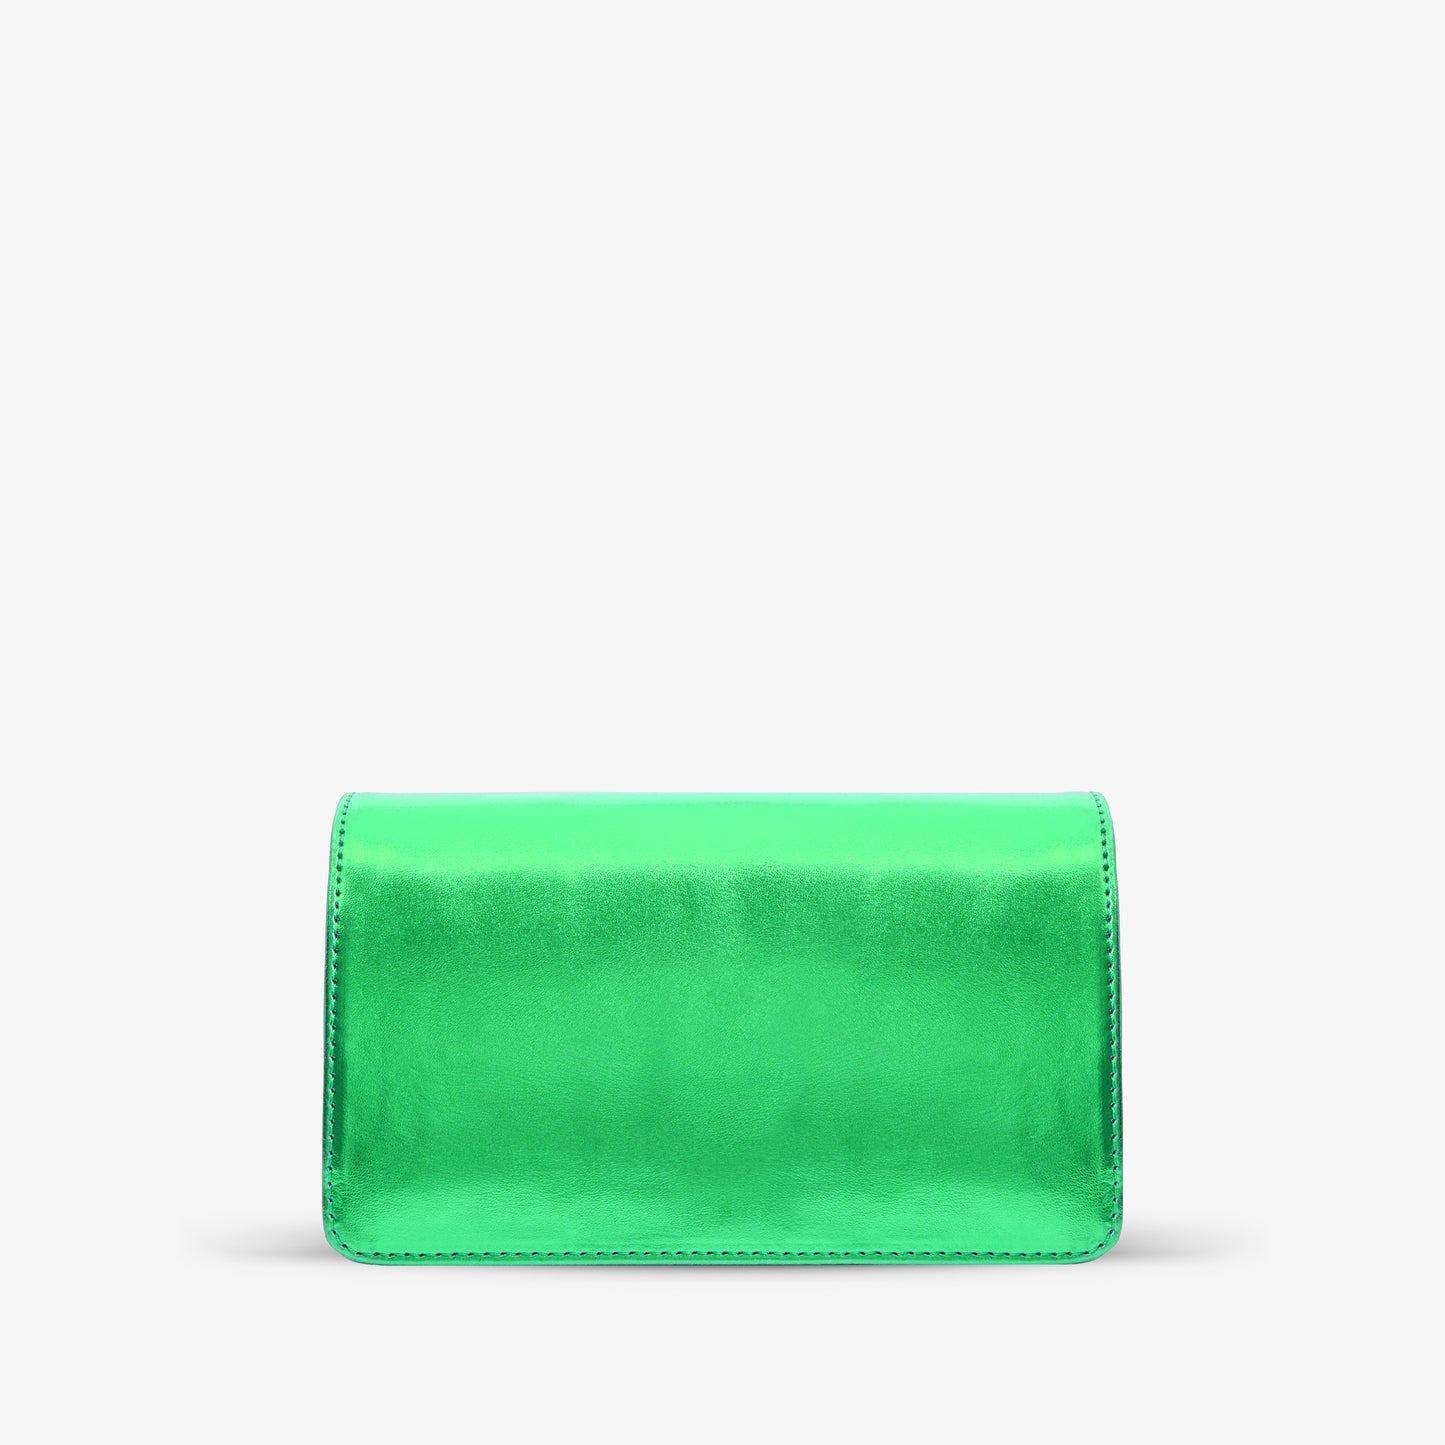 The Torola Green Handbag